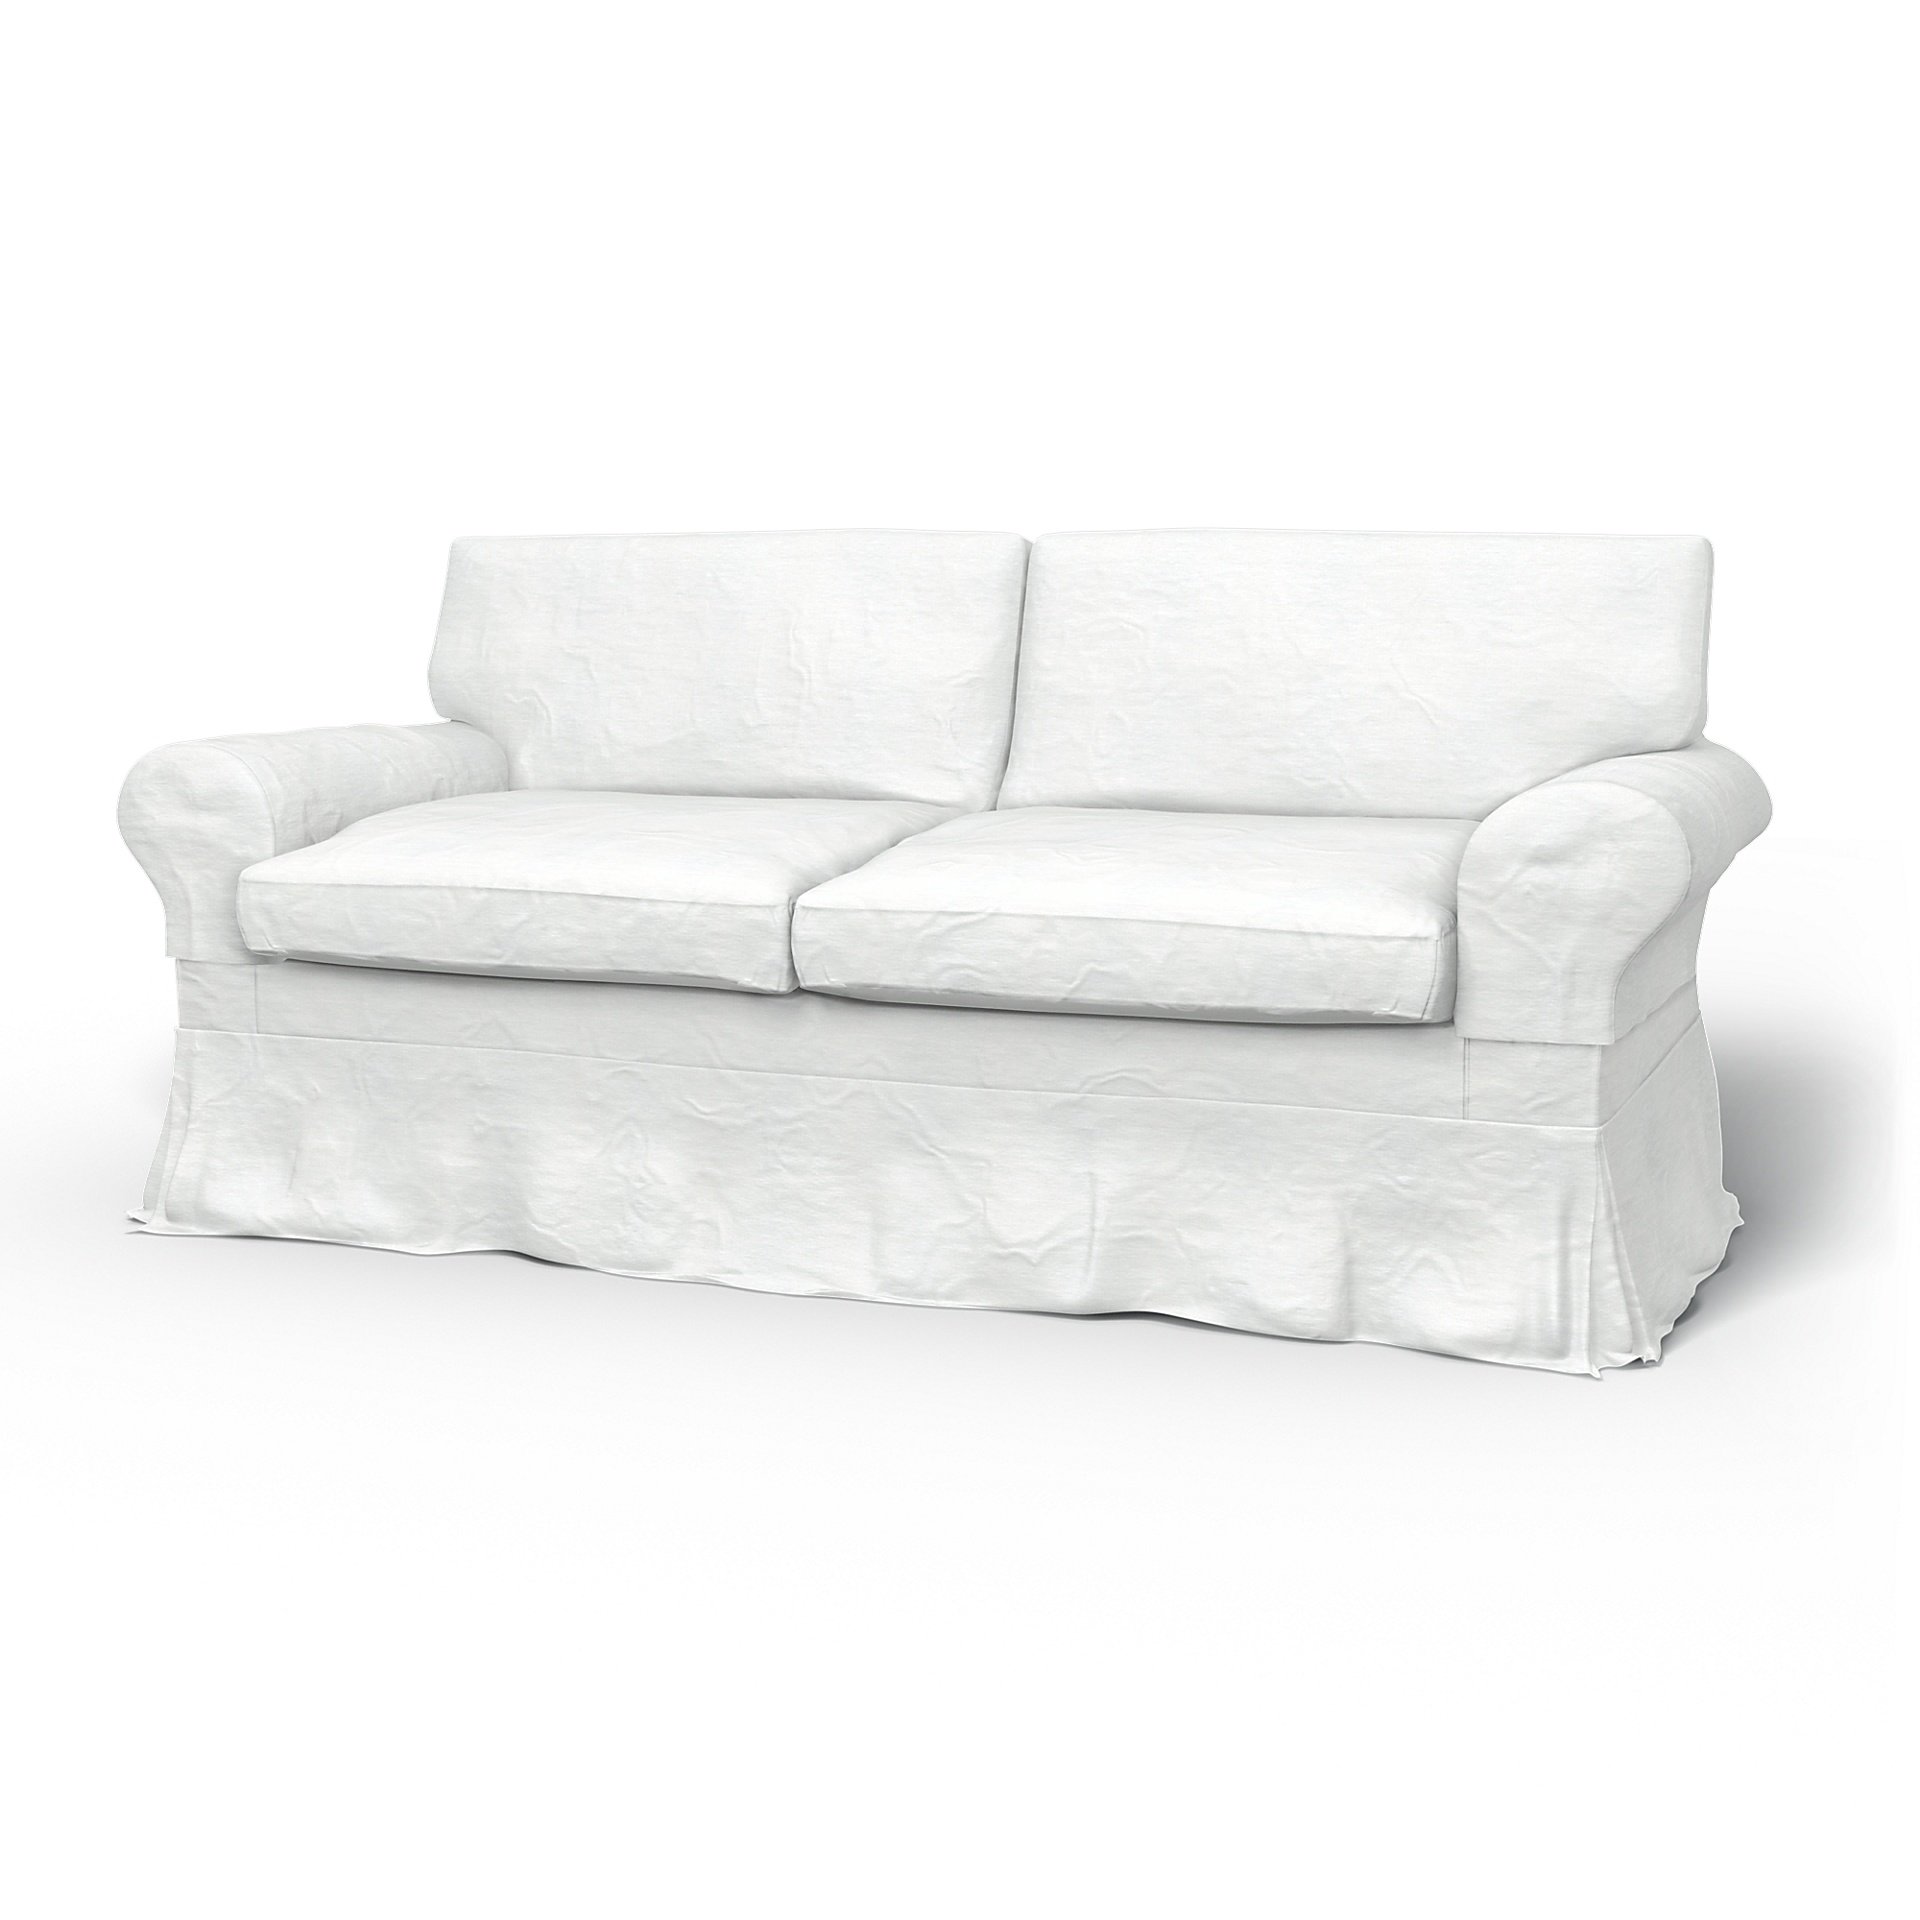 IKEA - Ektorp 2 Seater Sofa Bed Cover, White, Linen - Bemz